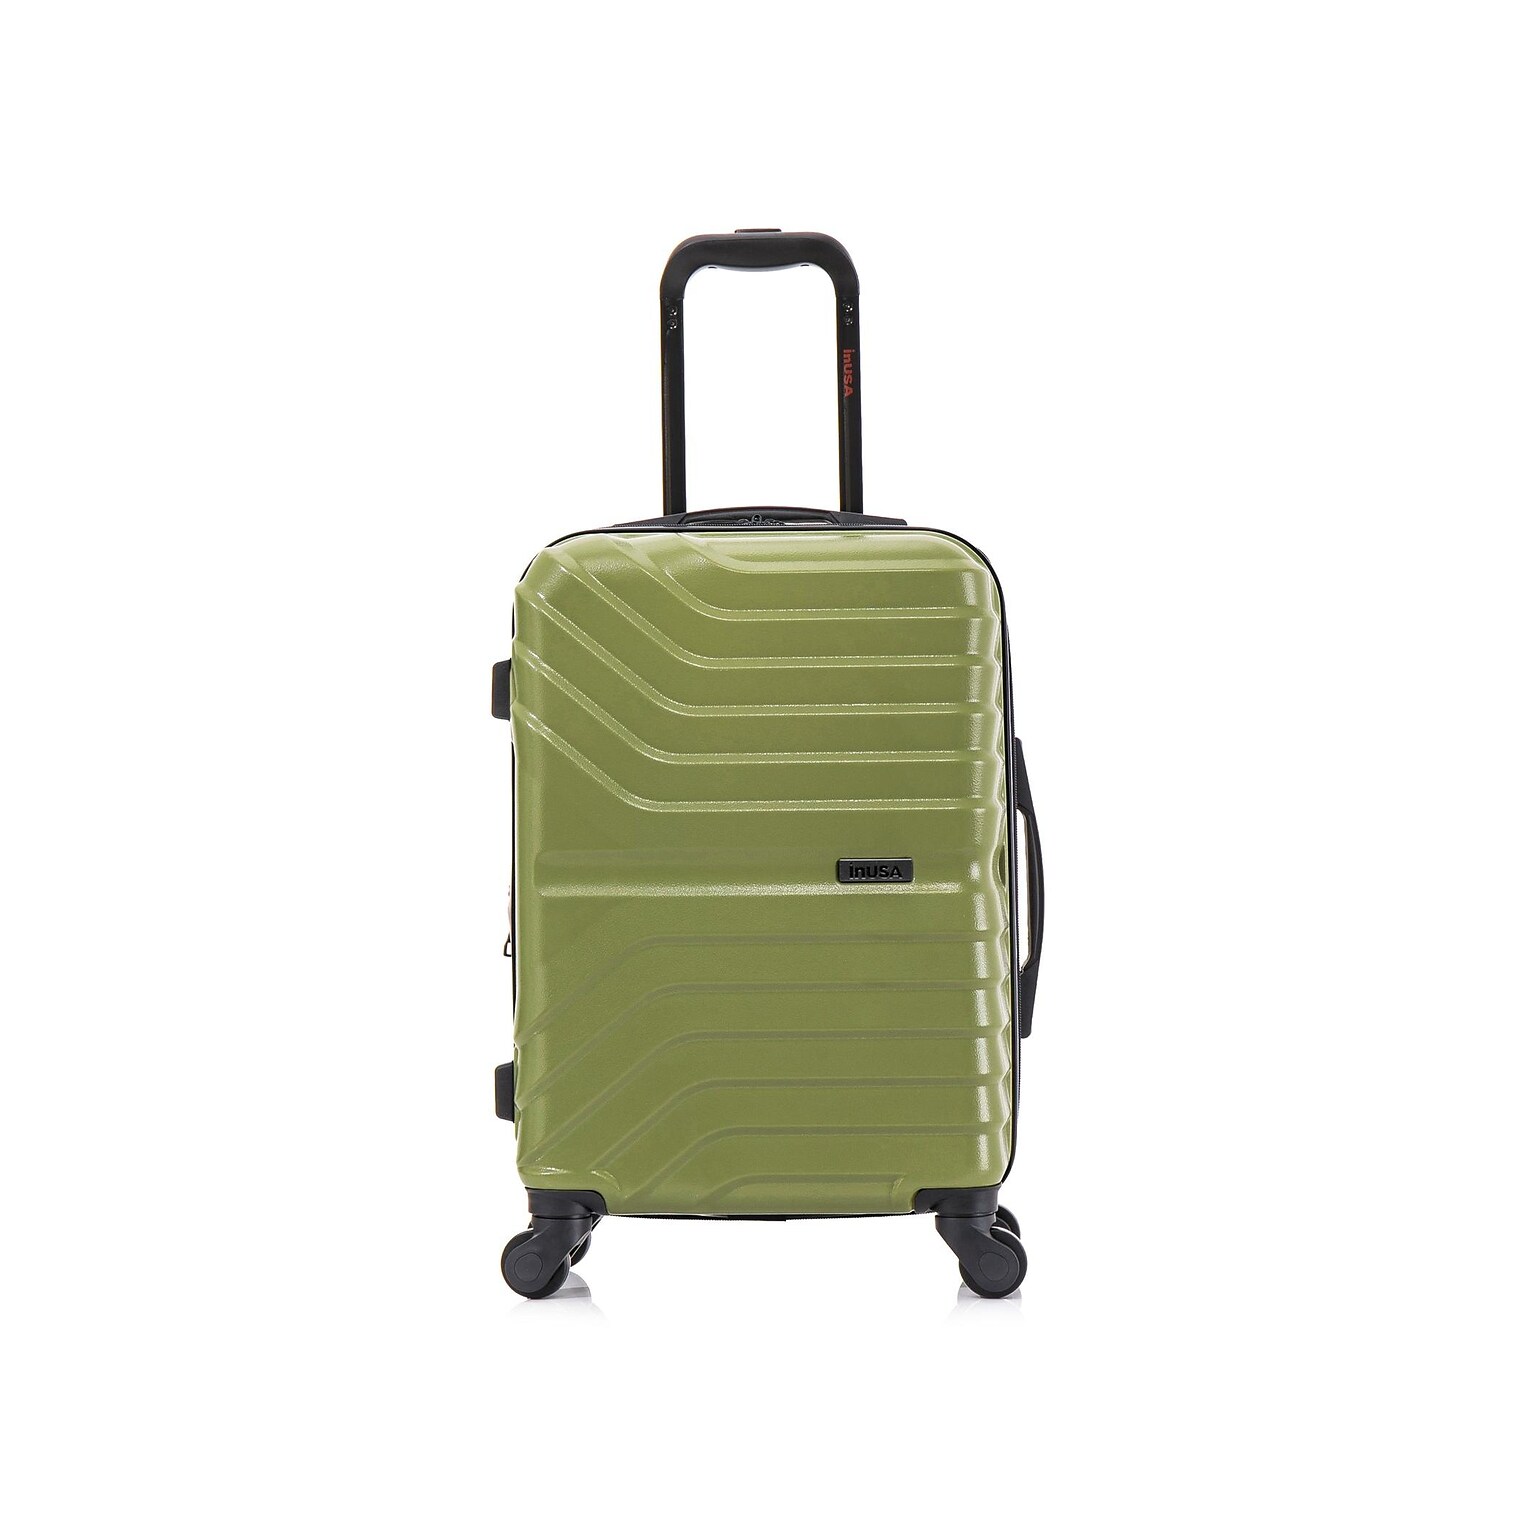 InUSA Aurum 23.65 Hardside Carry-On Suitcase, 4-Wheeled Spinner, Green (IUAUR00S-GRN)